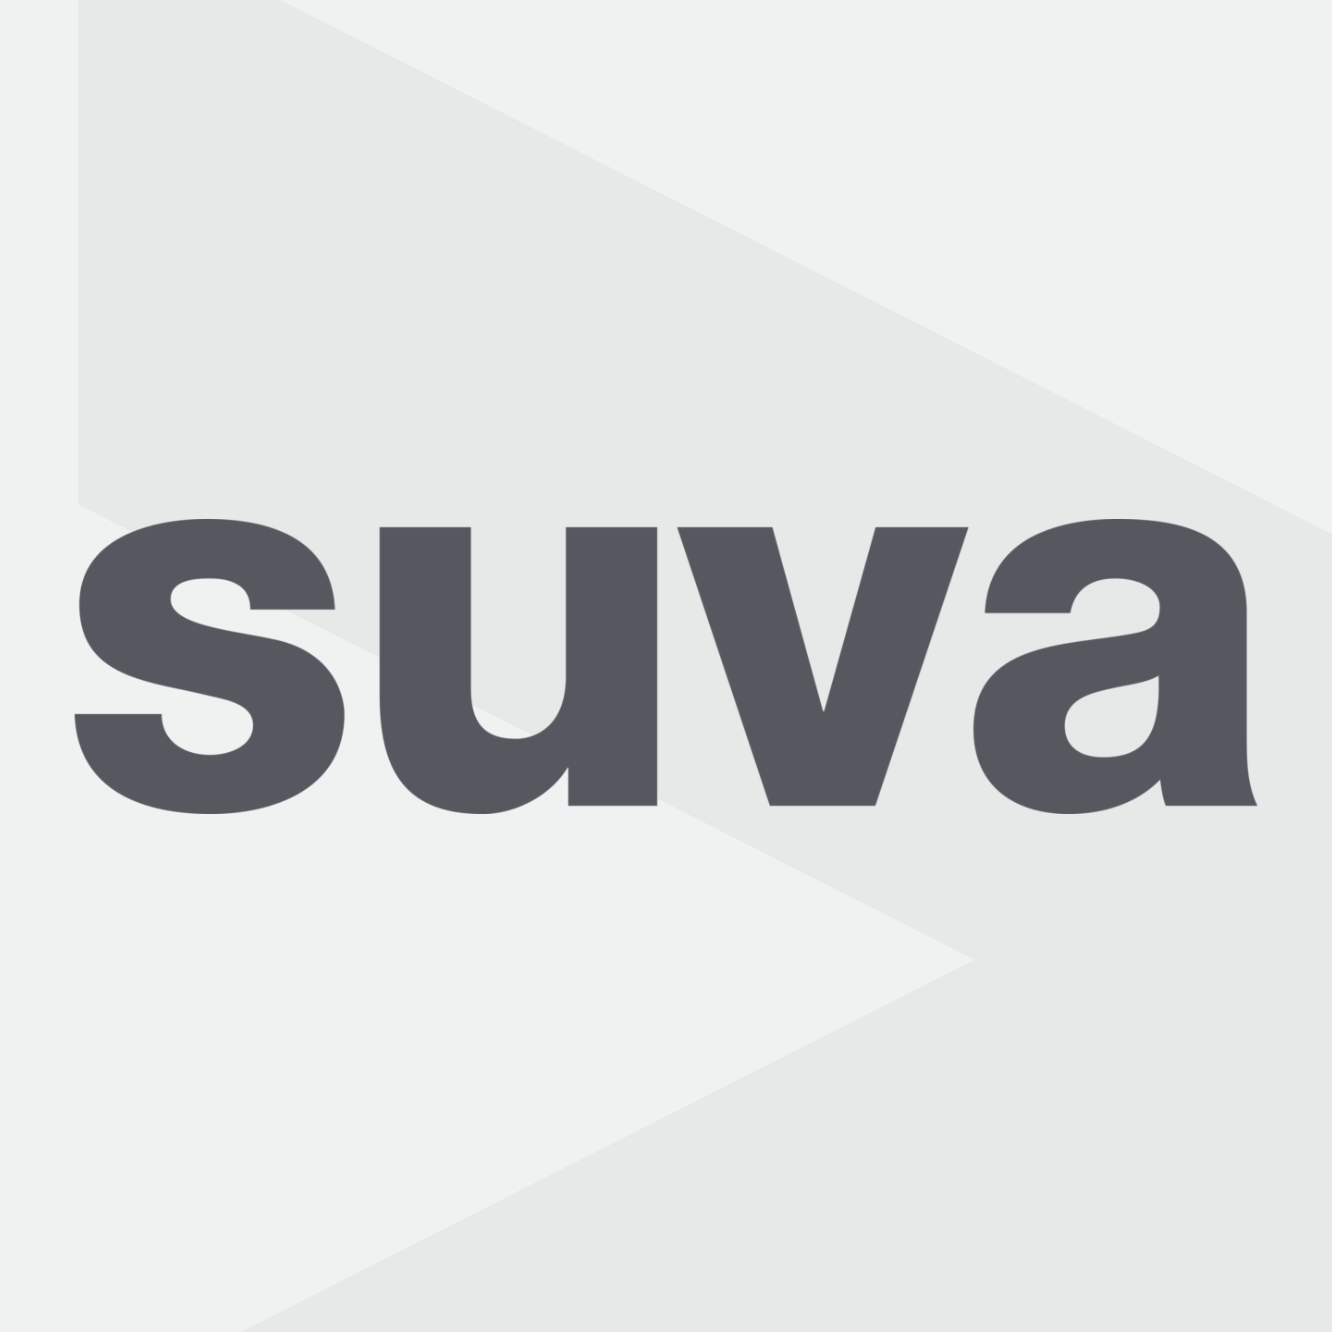 Suva Case Study